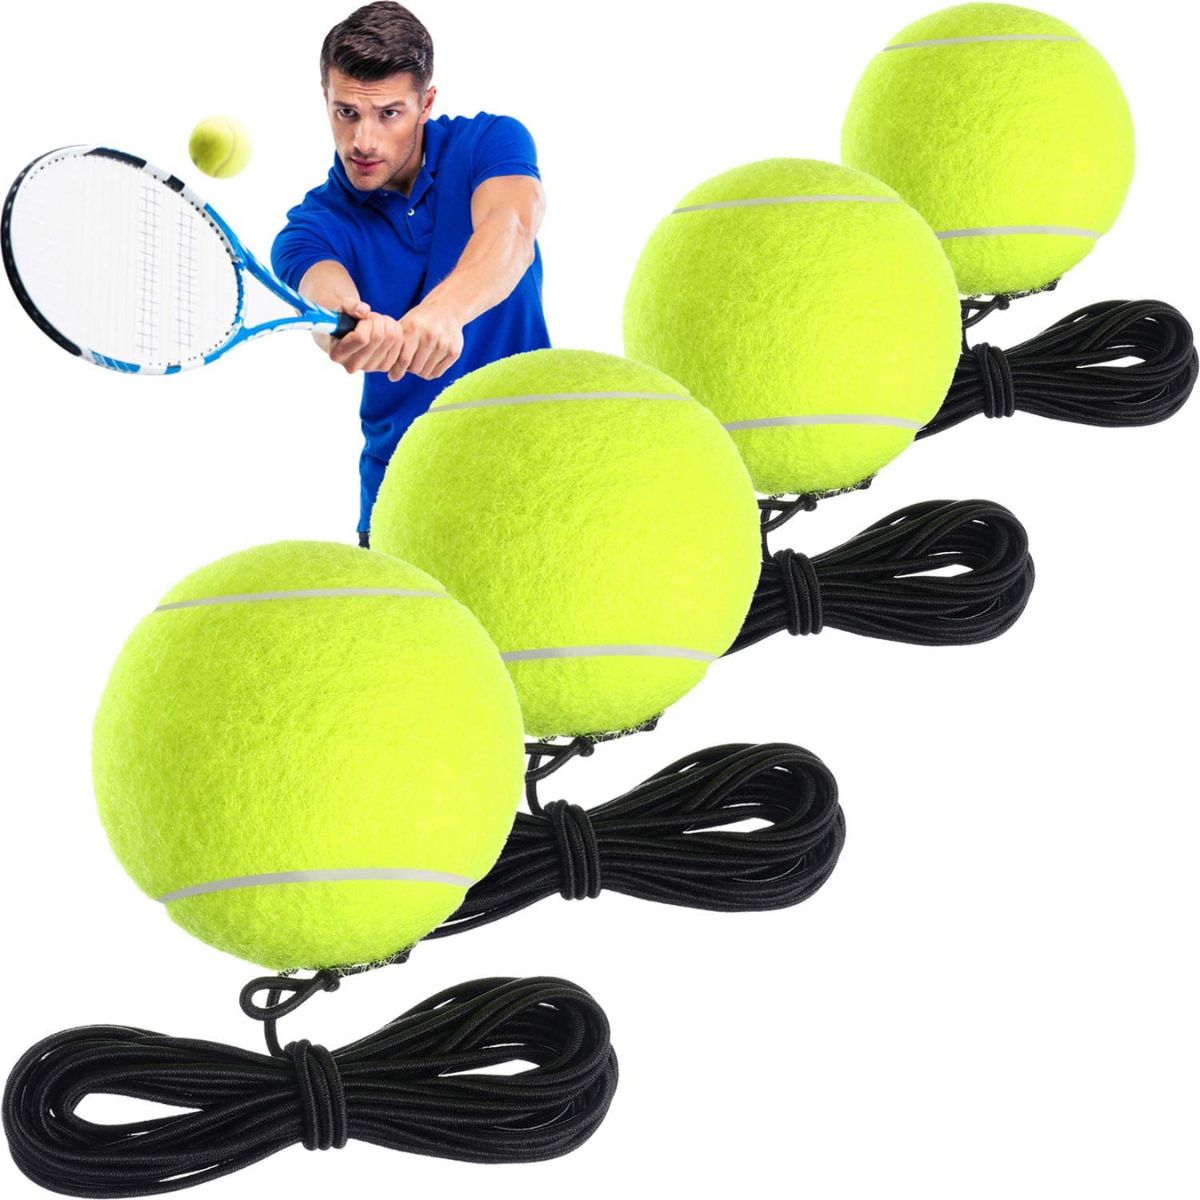 Pet Dog Playing Balls with Mesh Carry Bag URBEST Tennis Balls 12 Packs Training Tennis Balls Practice Balls for Novice Player 